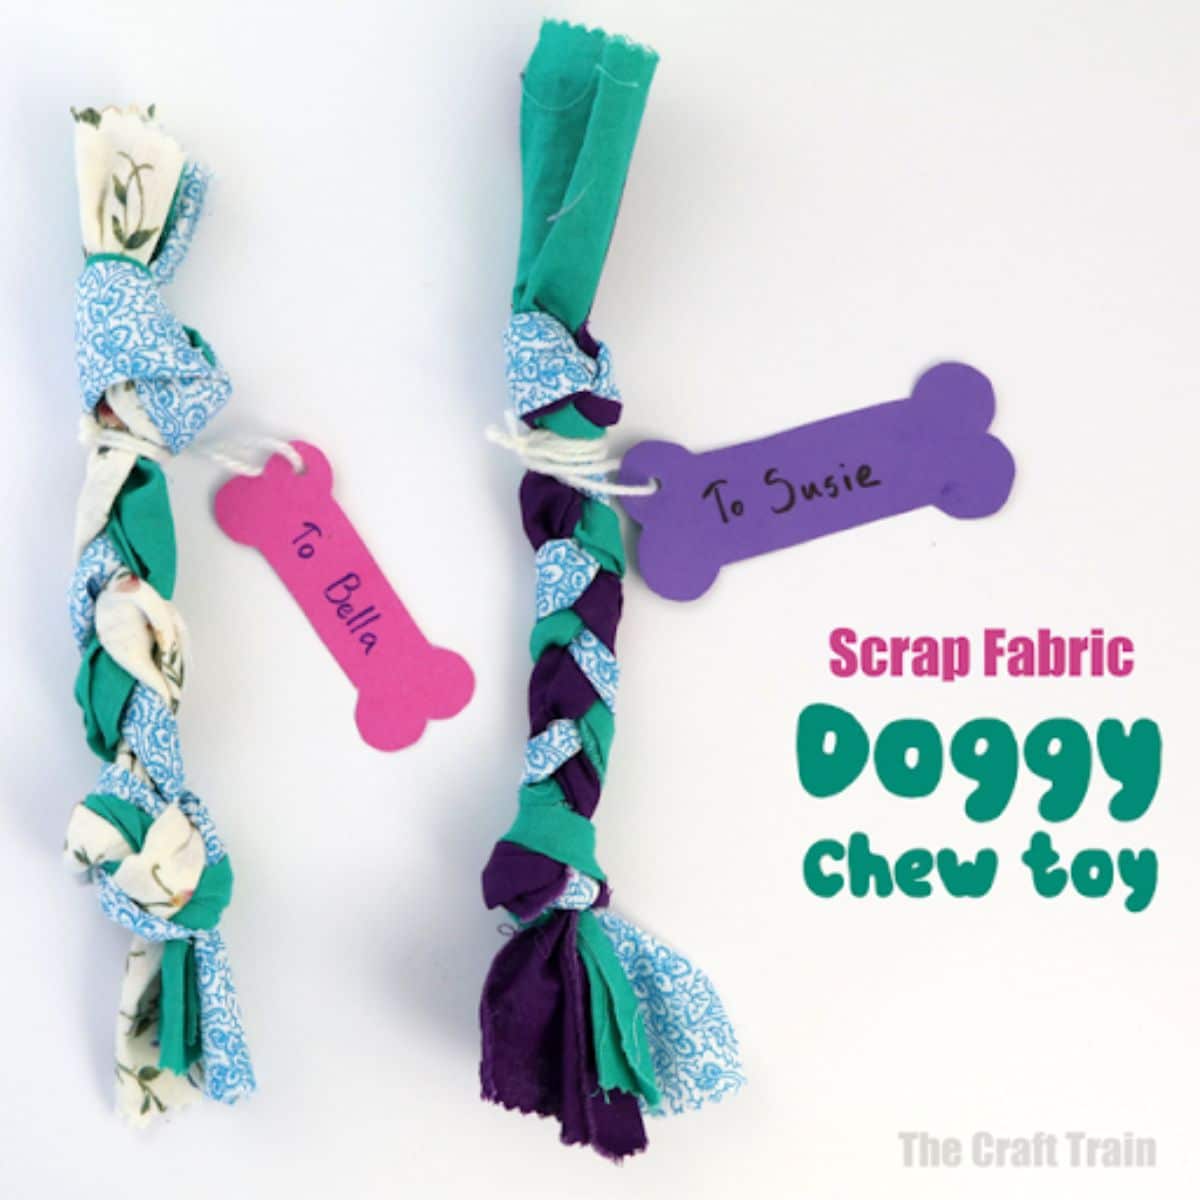 Scrap Fabric Doggy Chew Toy